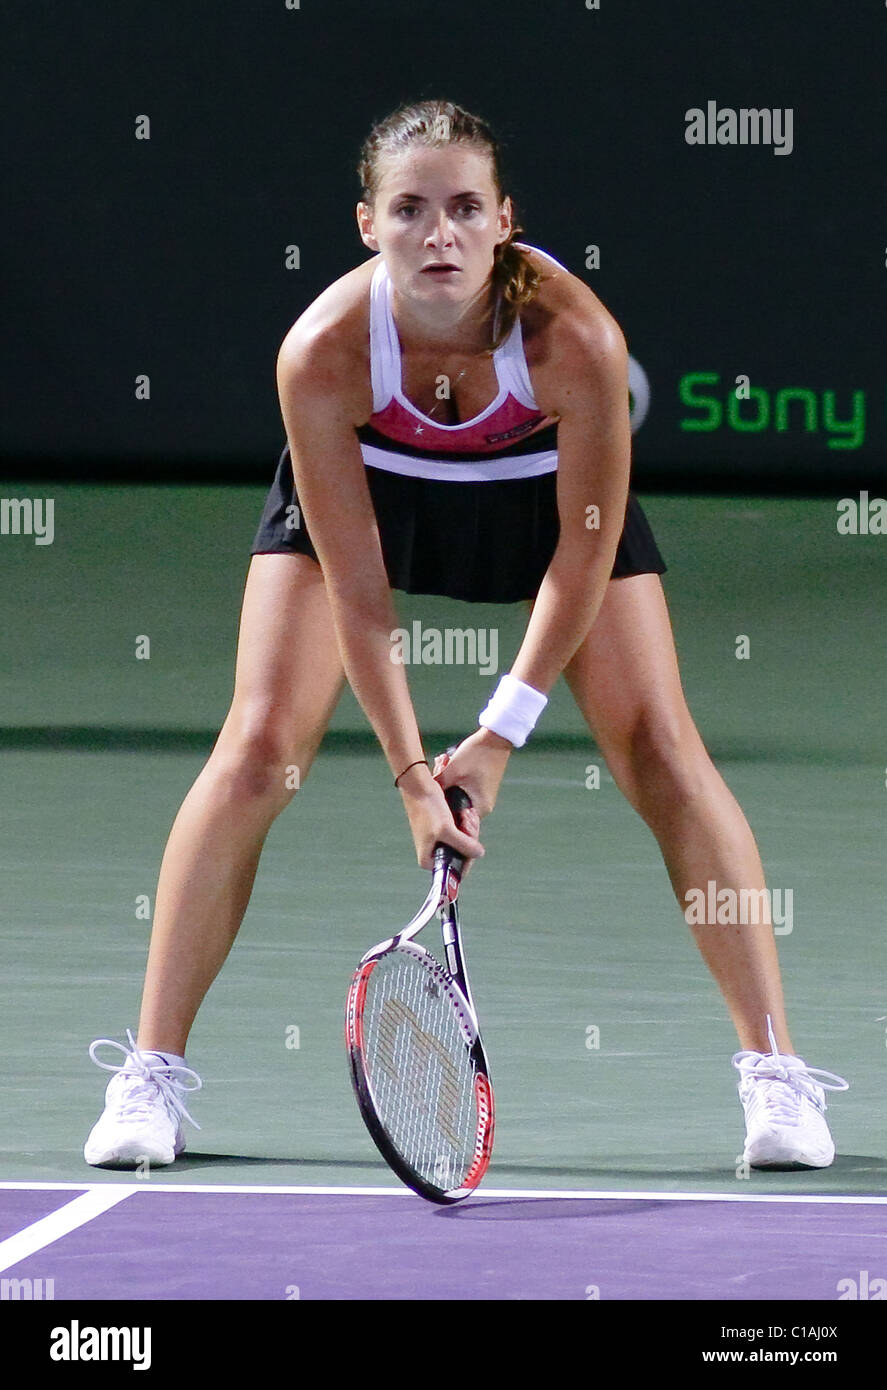 Czech tennis superstar, Iveta Benesova plays against Venus Williams on Day 10 of the Sony Ericsson Open Key Biscayne, Florida - Stock Photo